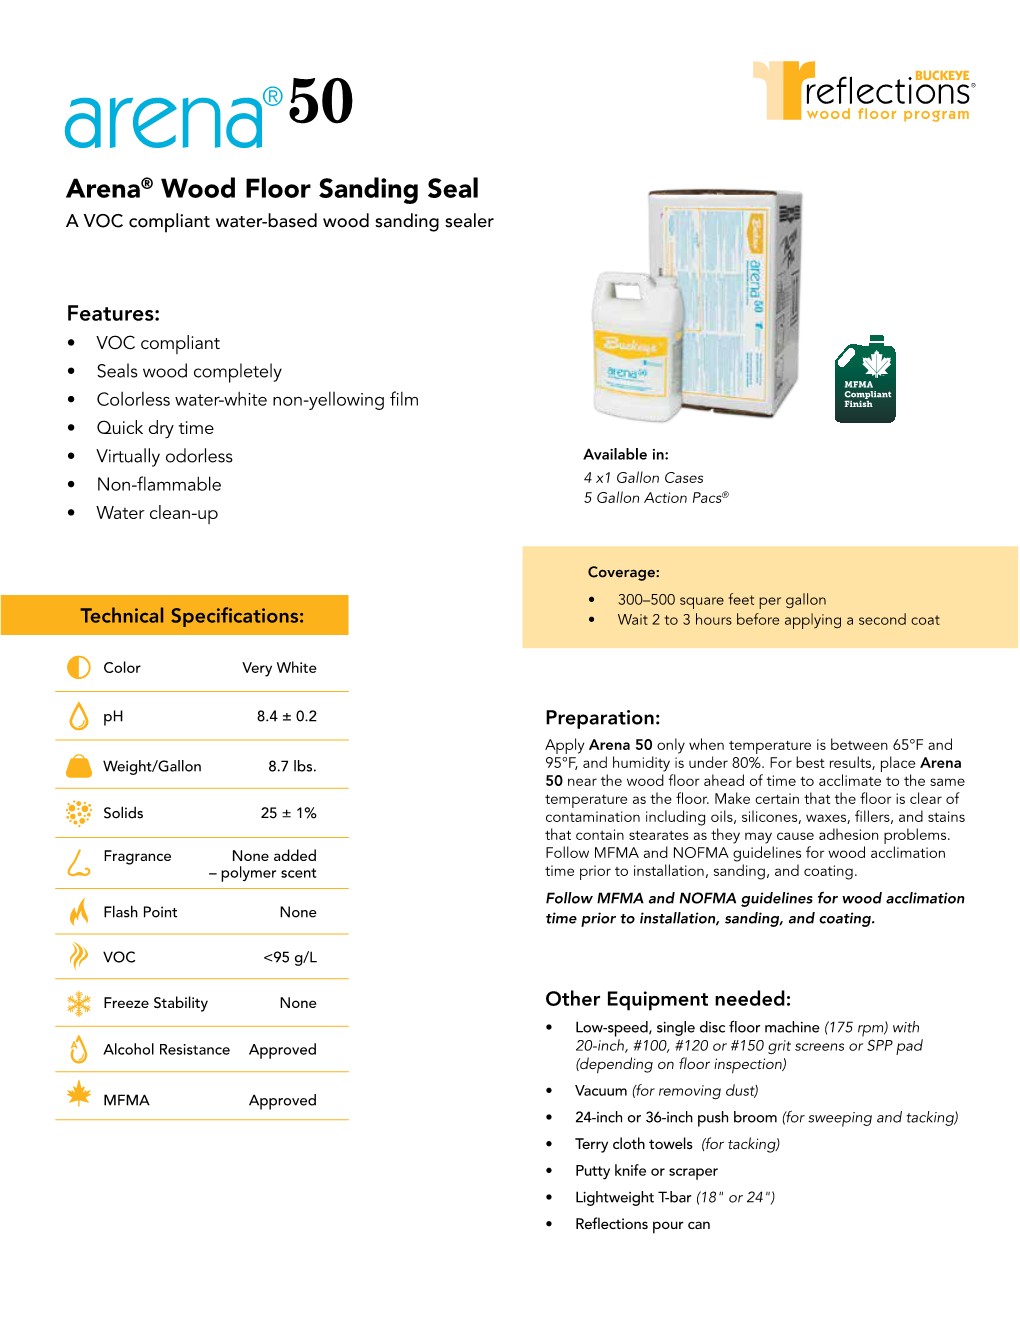 Arena® Wood Floor Sanding Seal a VOC Compliant Water-Based Wood Sanding Sealer